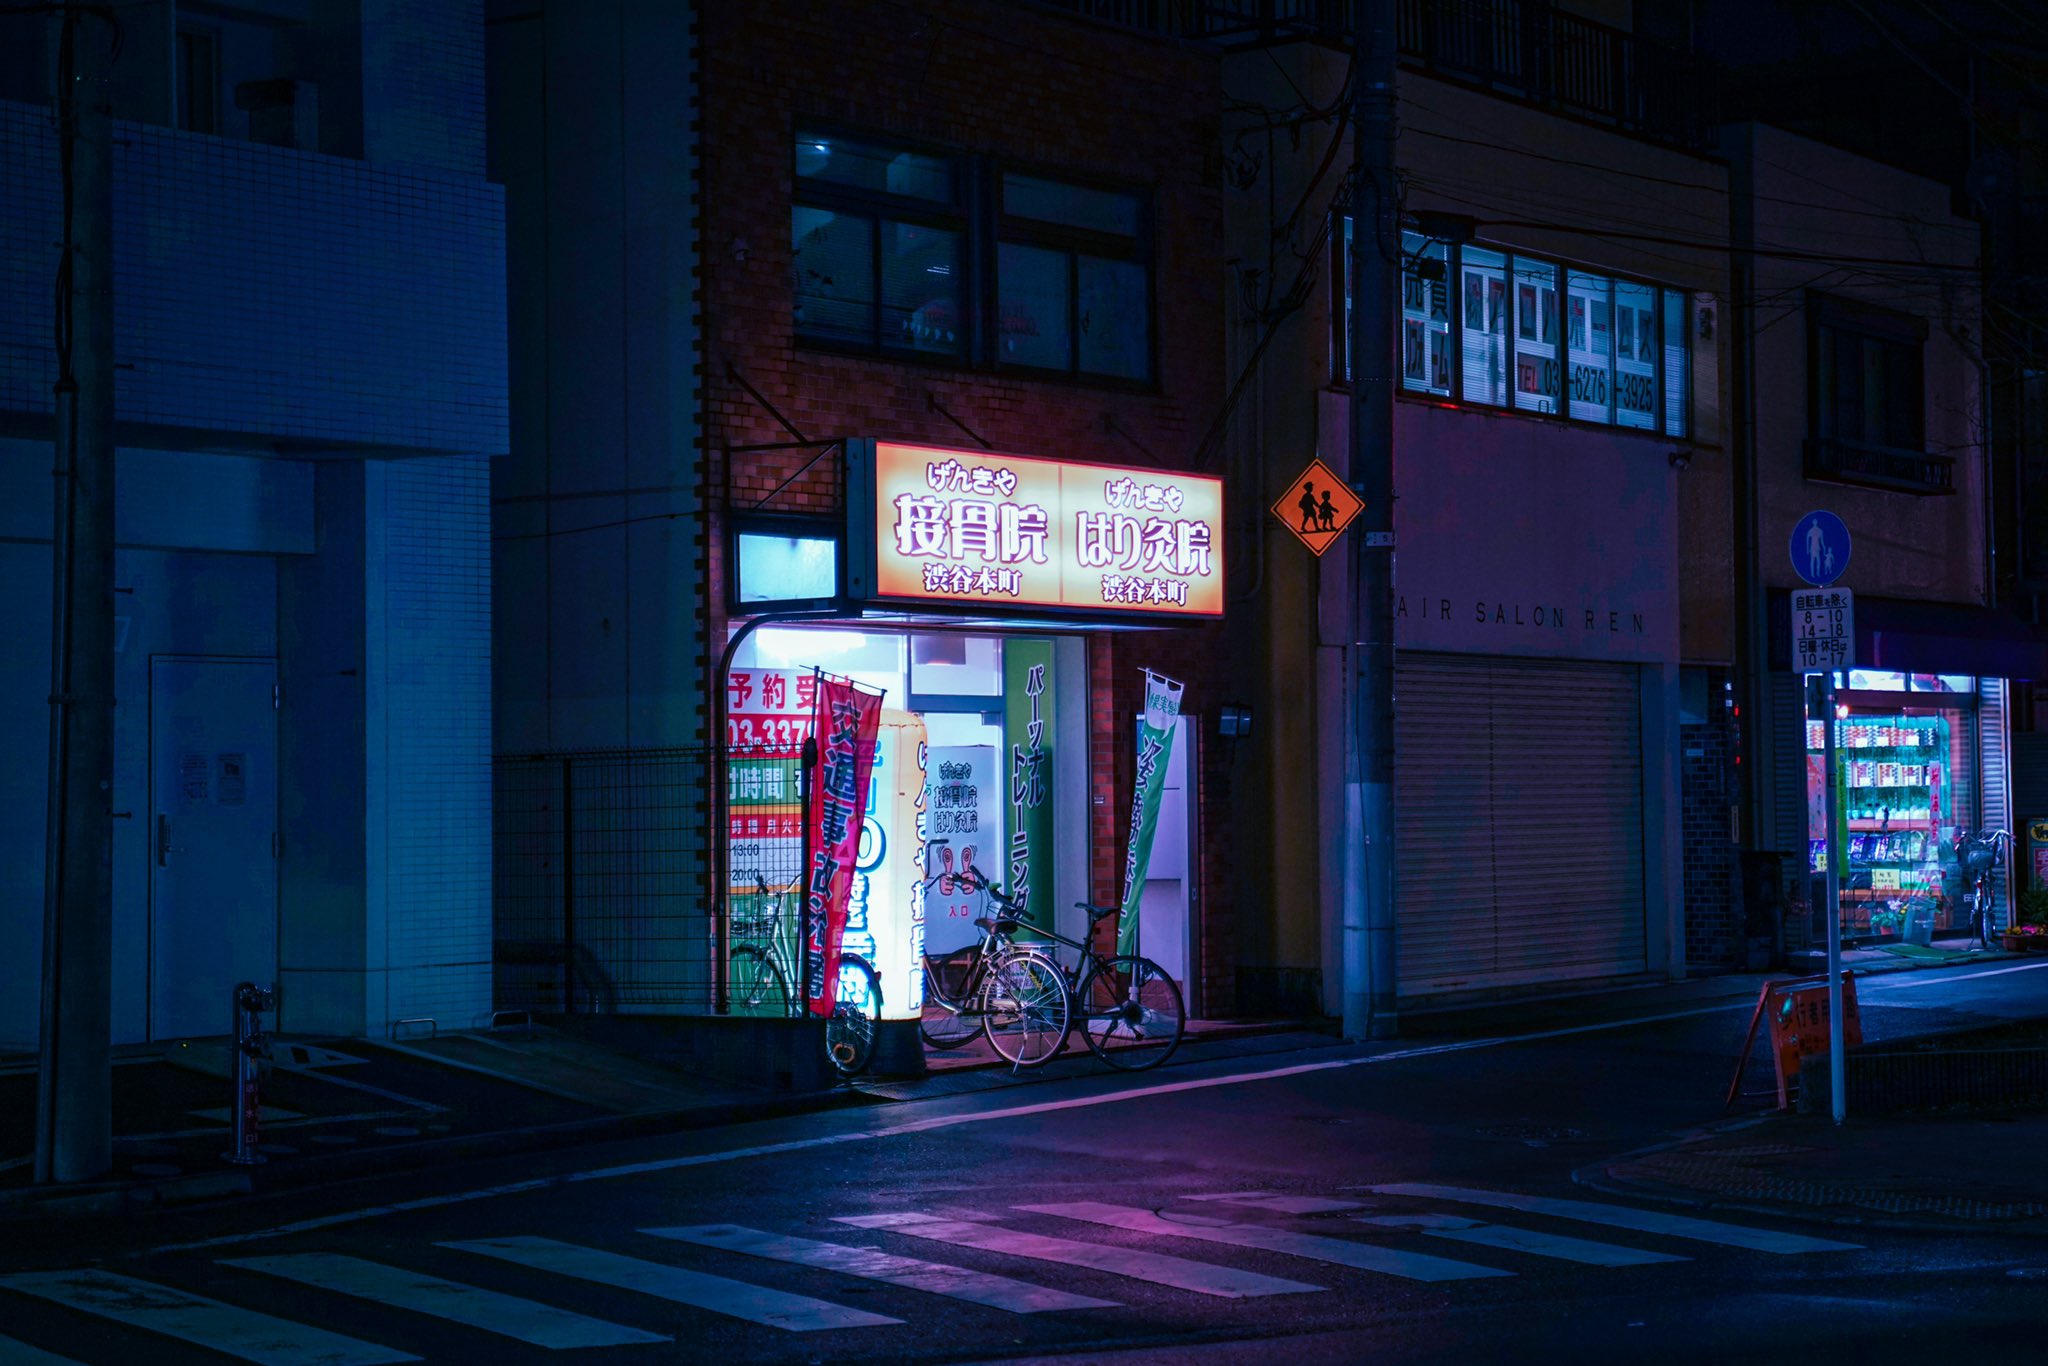 Alex Knight // AGK42 on X: Bubble gum karaoke // #shibuya #tokyo #neon  #daily  / X